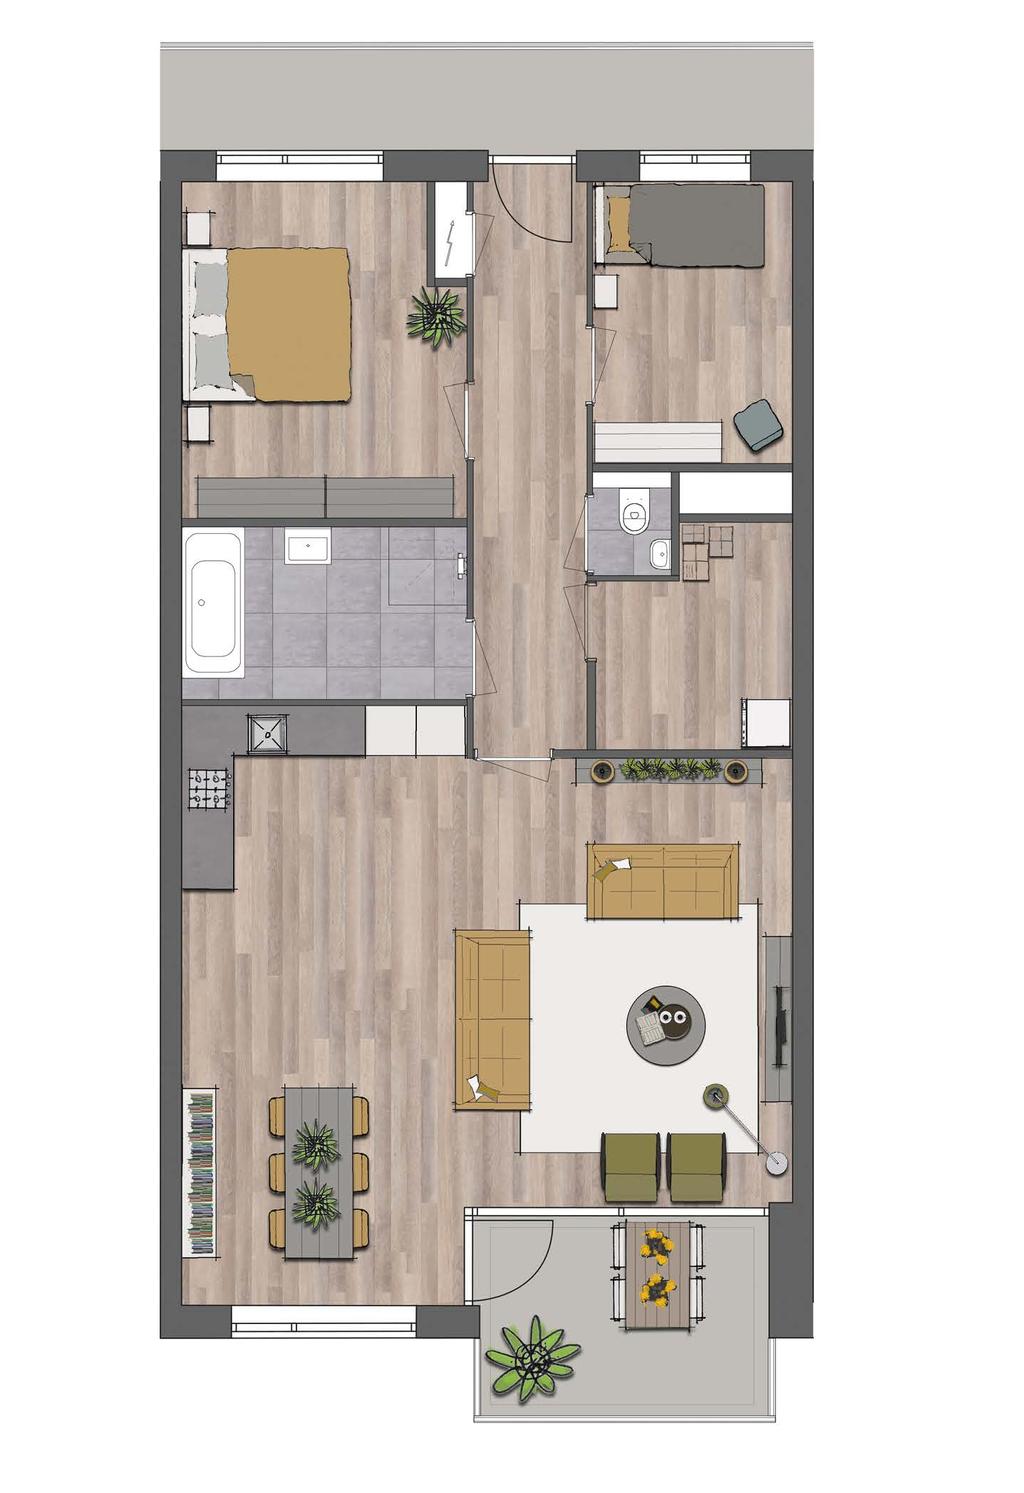 17 2 ruime slaapkamers het volledige appartement is voorzien van bnr. 16 vloerverwarming compleet afgewerkte SieMatic keuken, bnr.